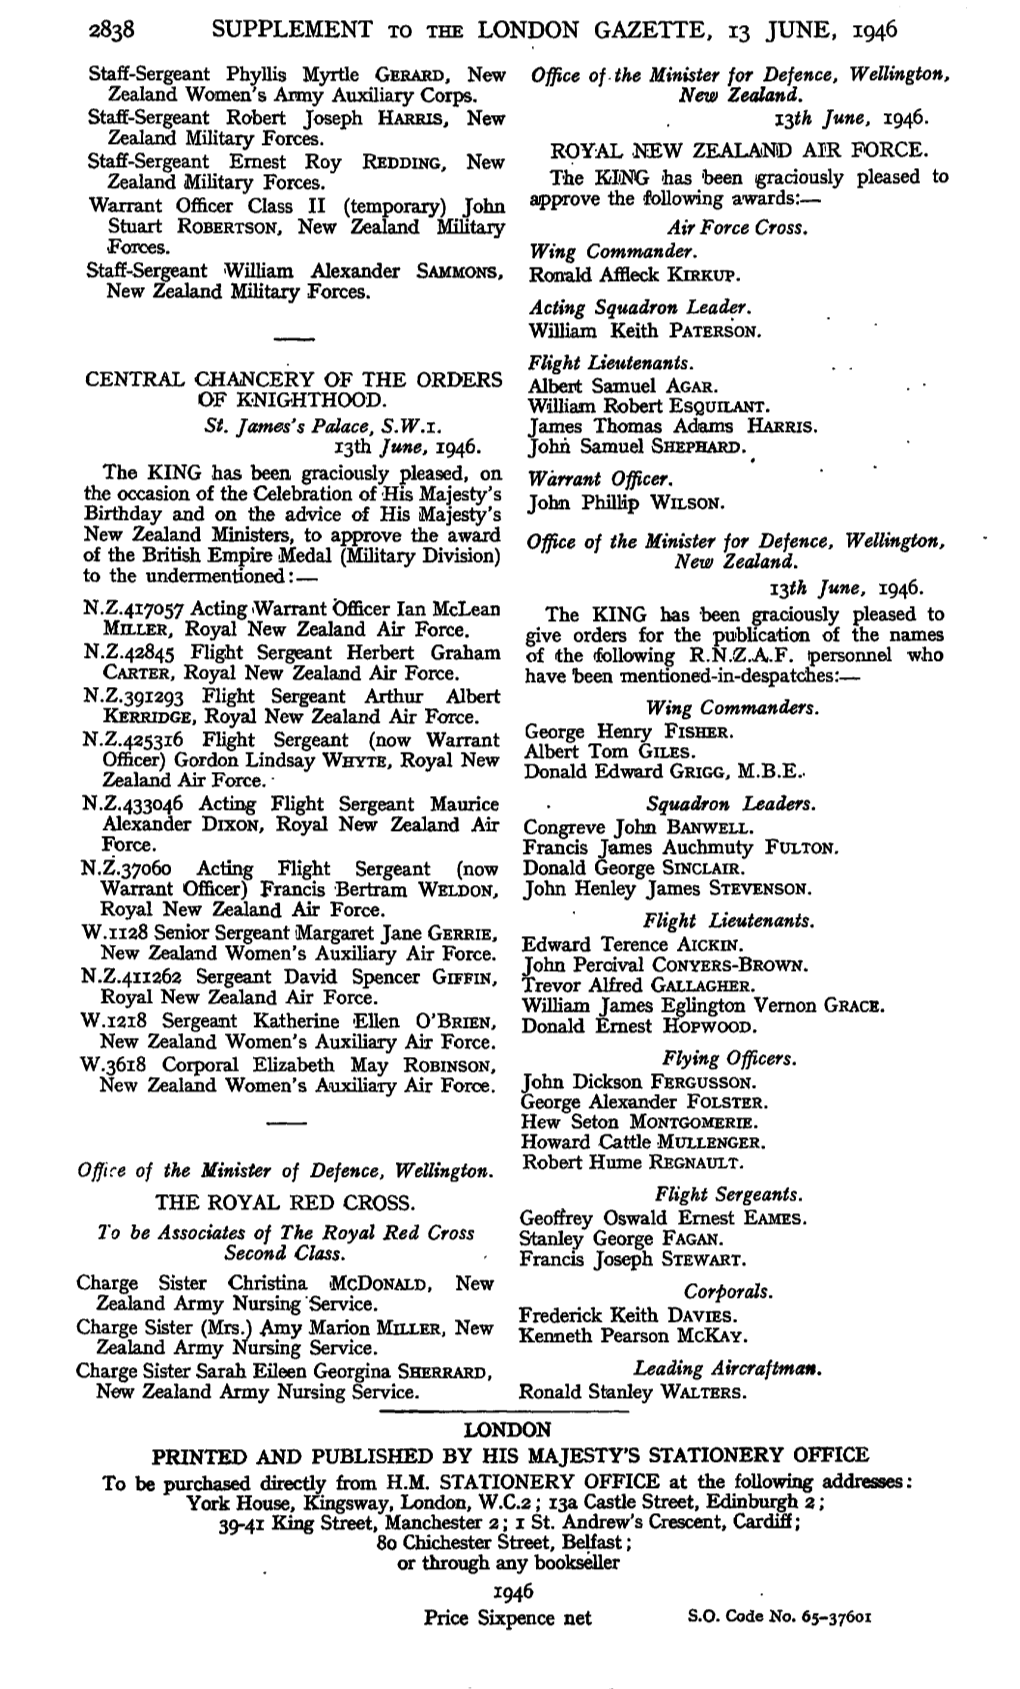 2838 Supplement to the London Gazette, 13 June, 1946